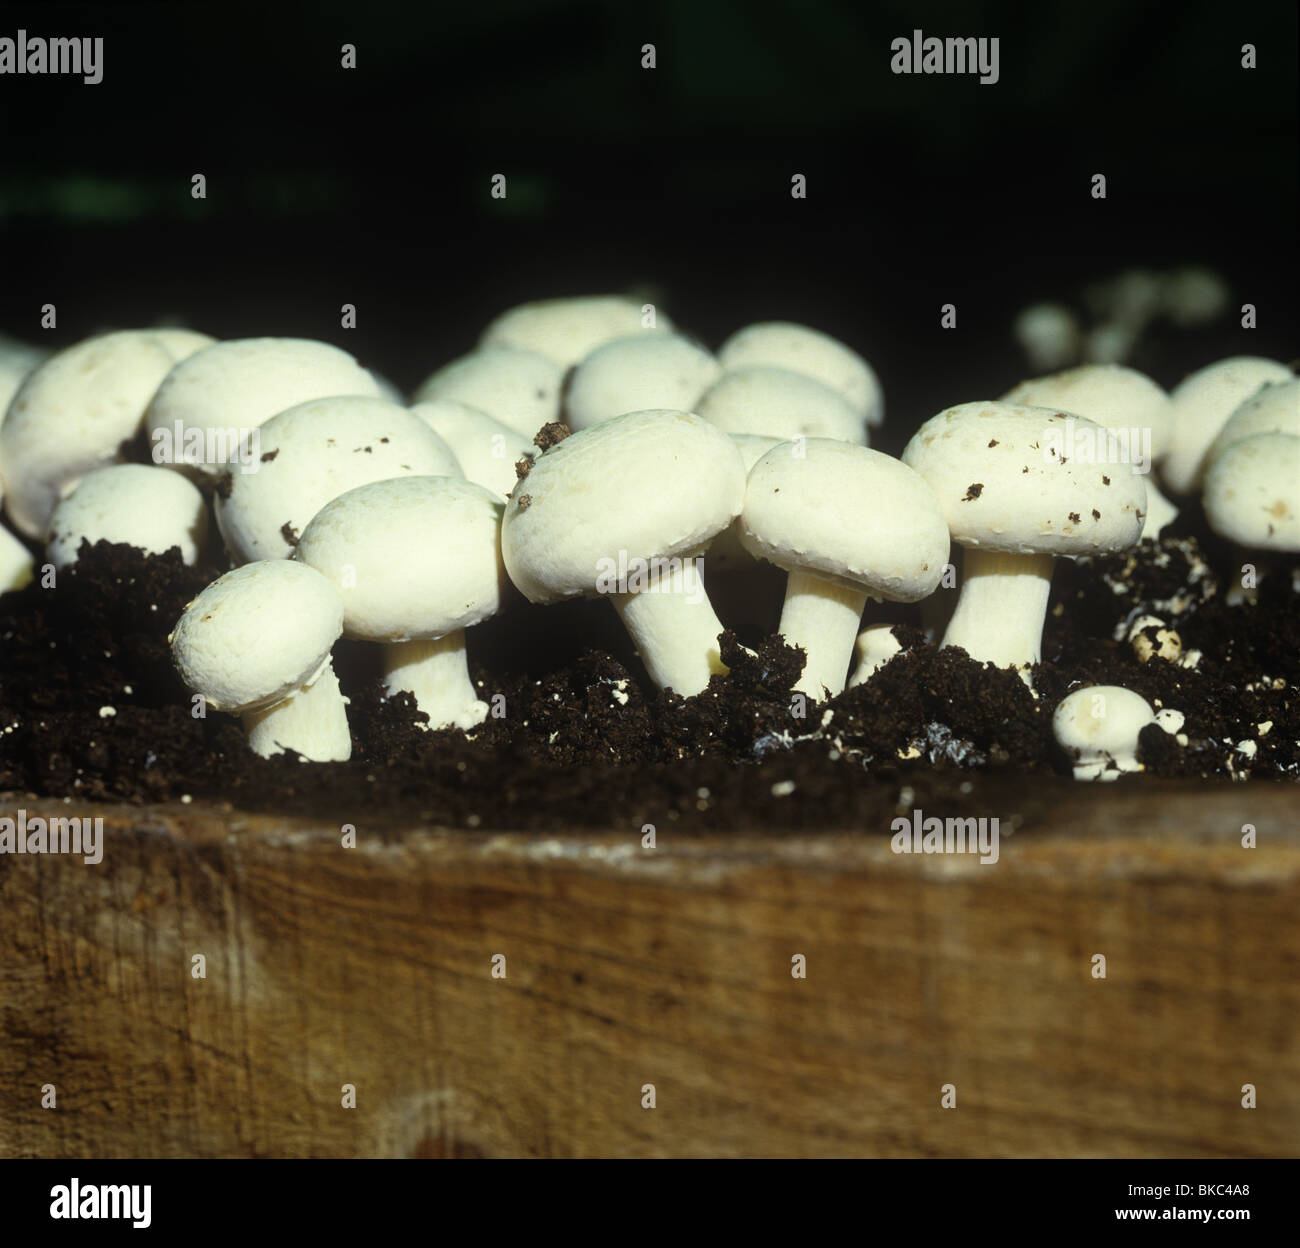 Mature mushroom caps in wooden trays Stock Photo